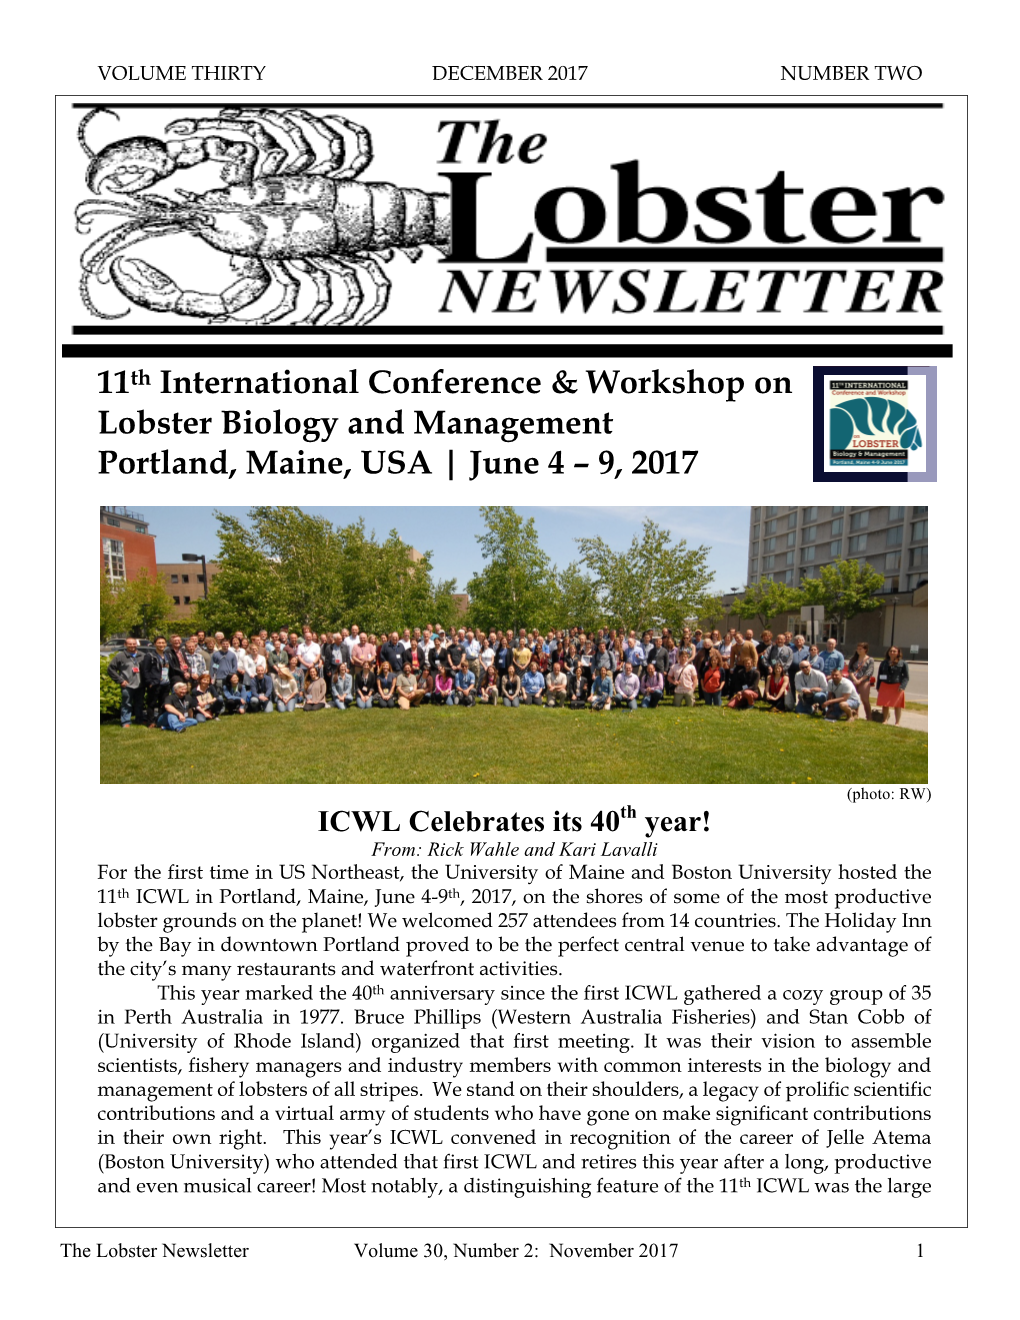 The Lobster Newsletter 30(2)